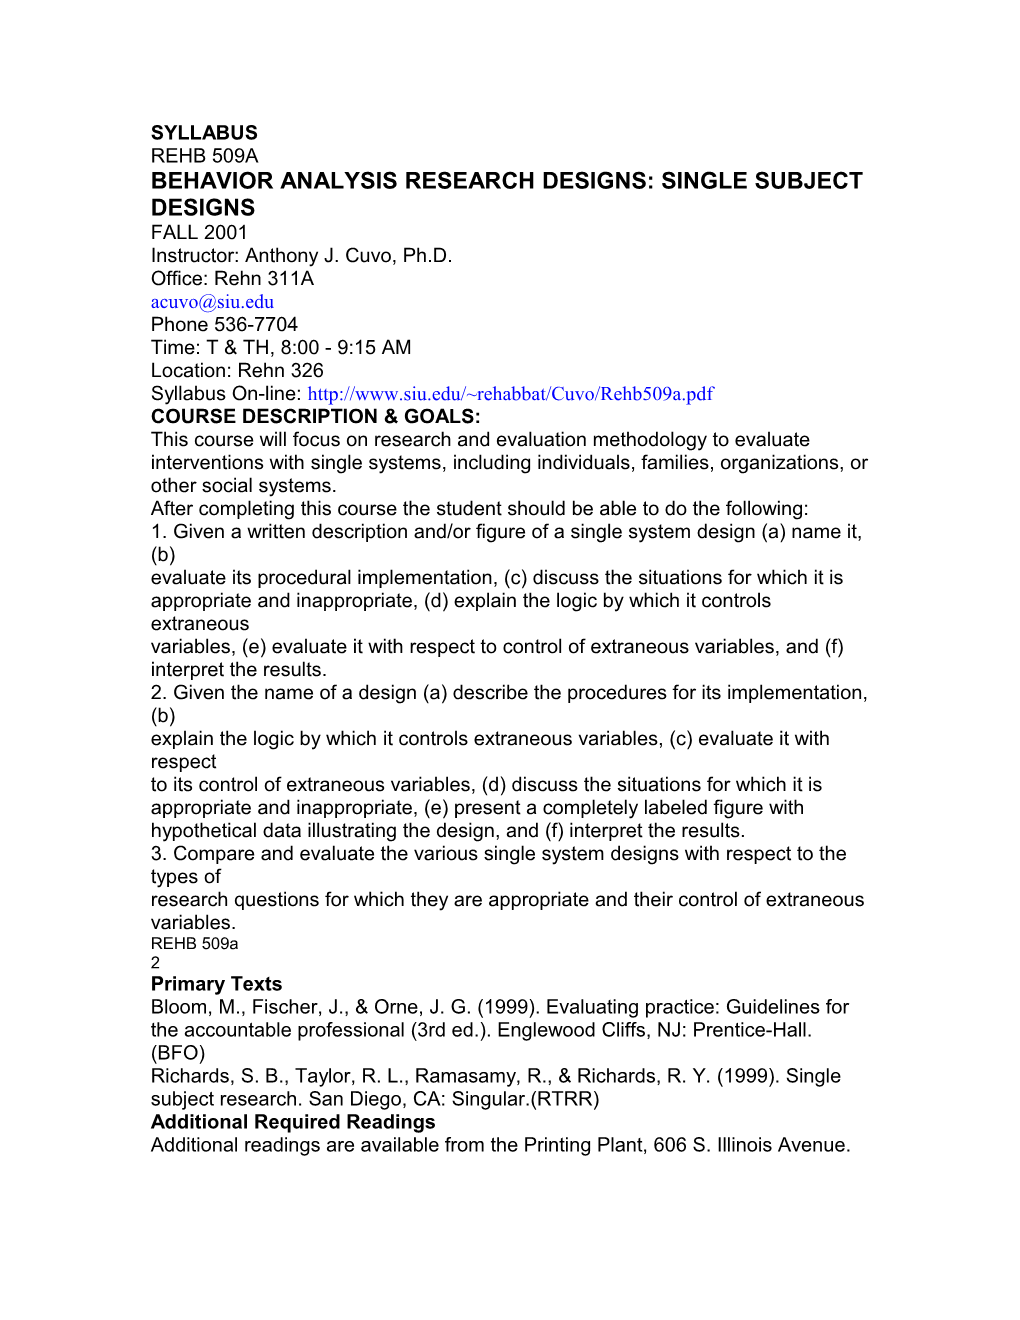 Behavior Analysis Research Designs: Single Subject